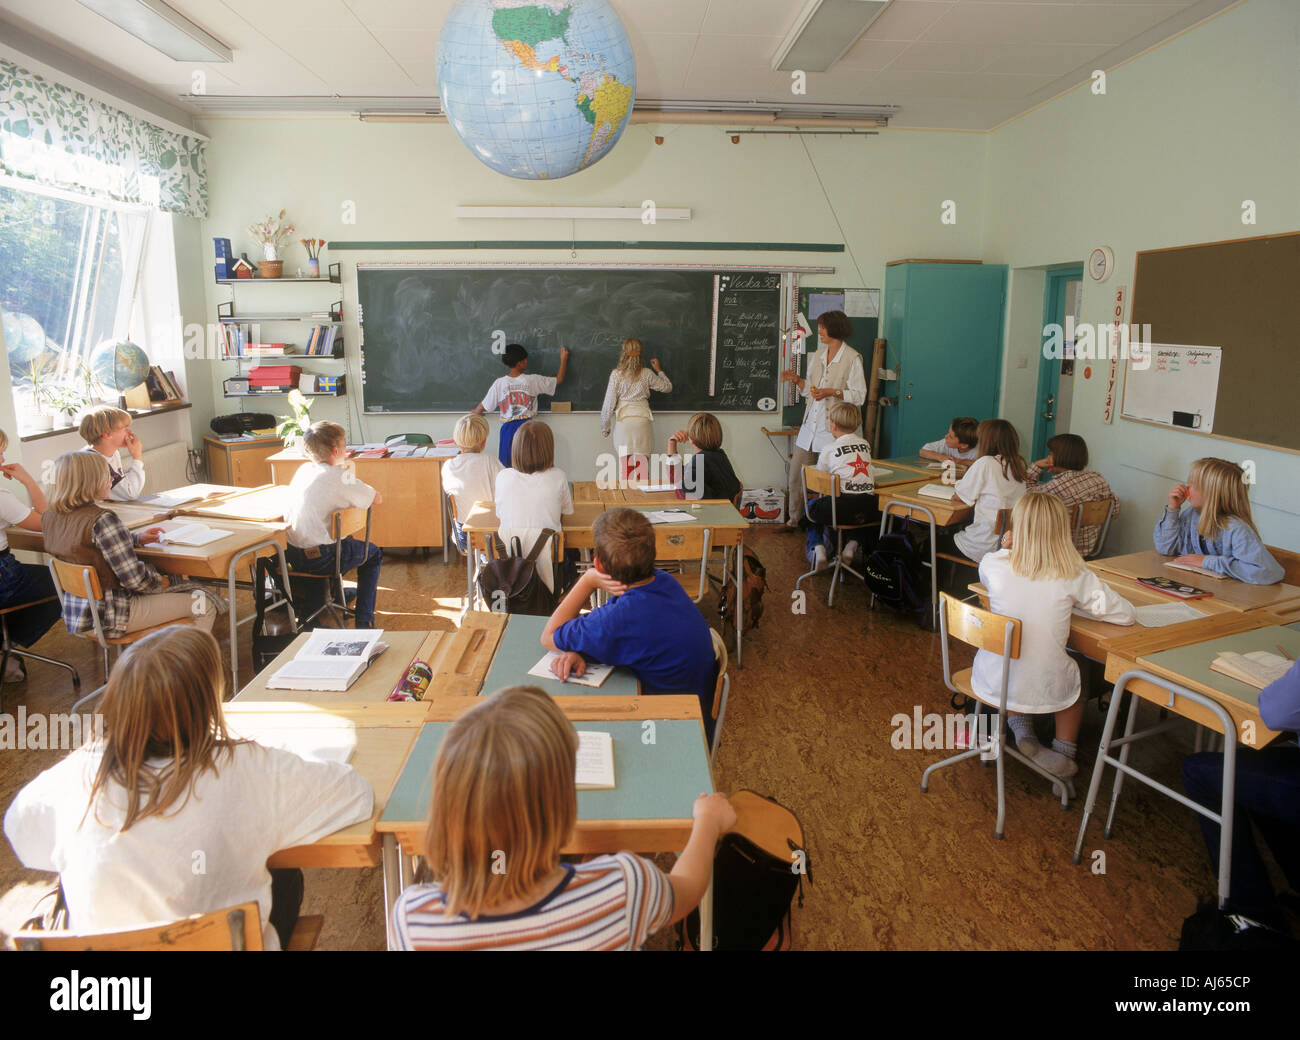 Elementary school children at desks and blackboard in Swedish classroom below world globe Stock Photo